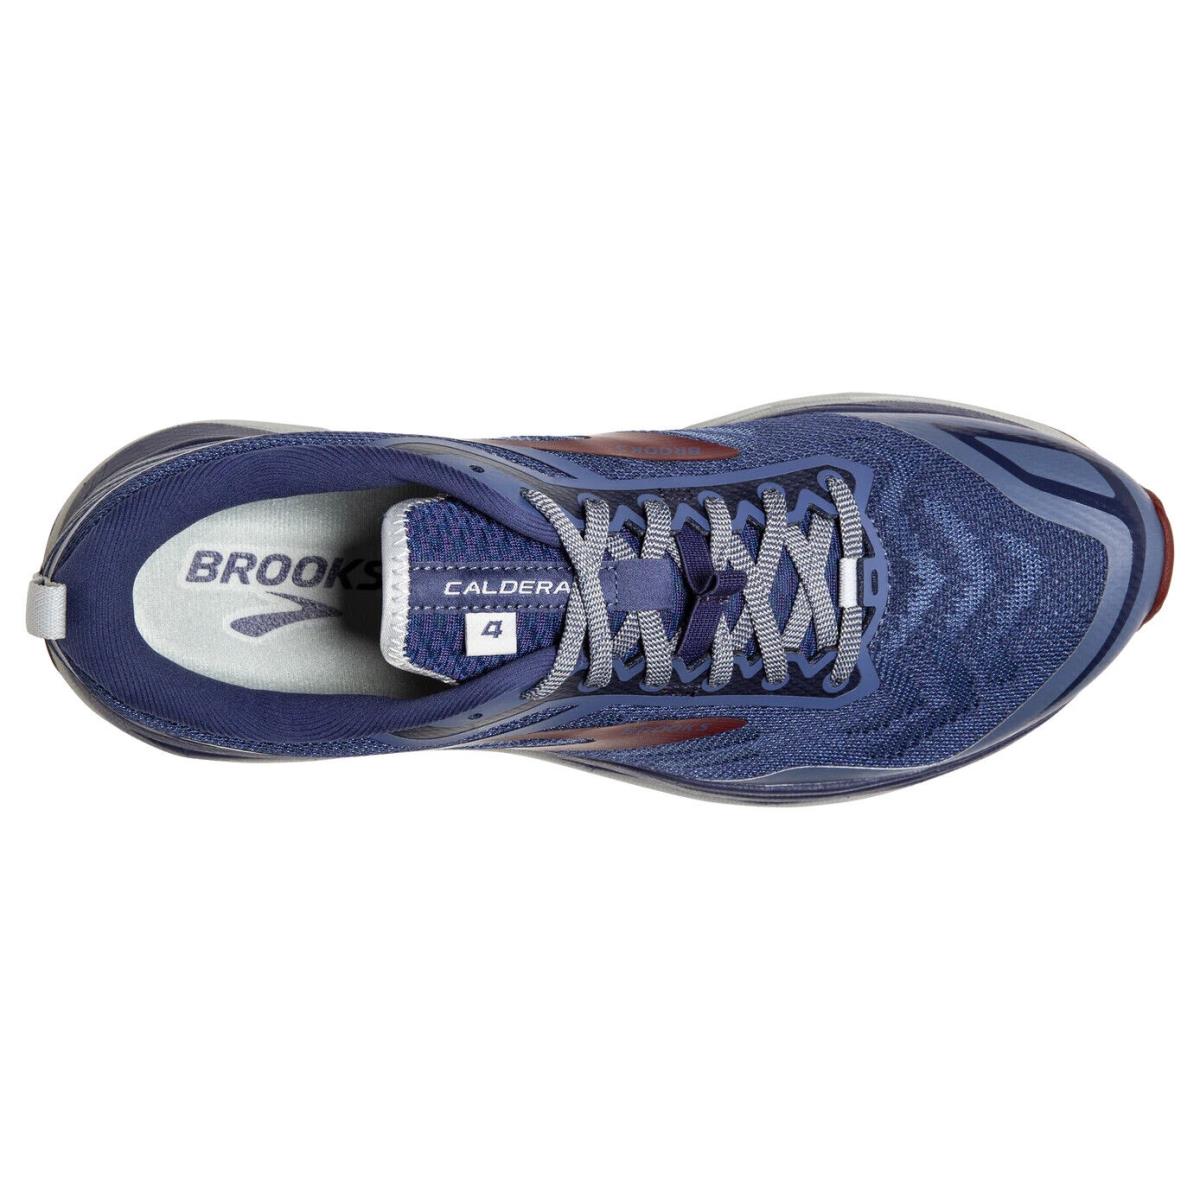 Brooks shoes Caldera - Multicolor 2